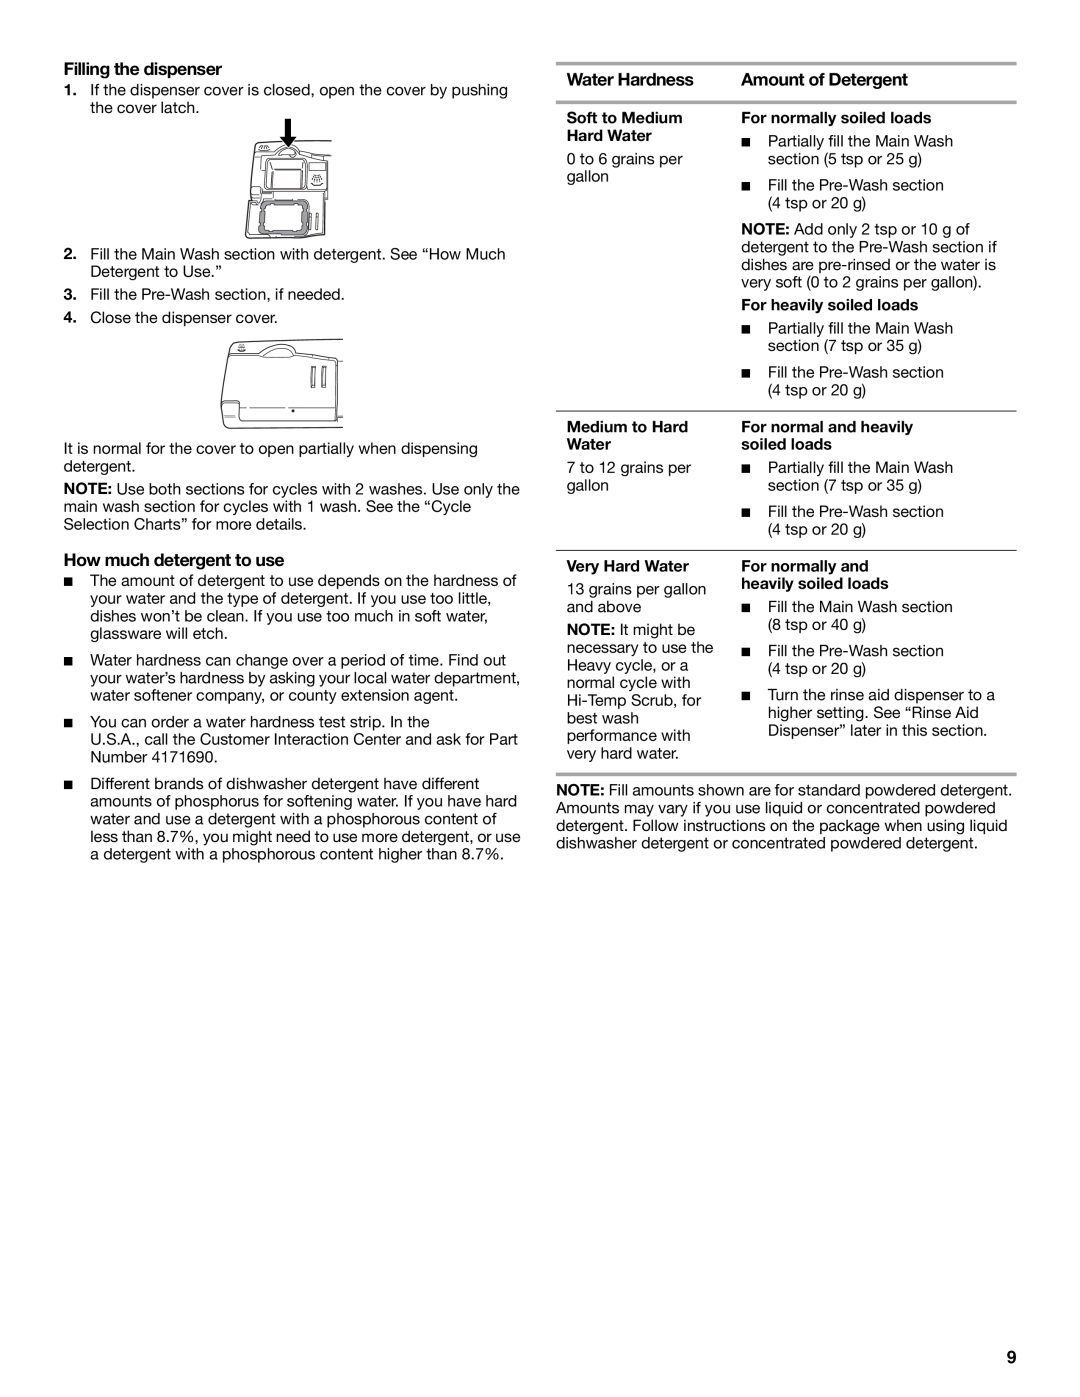 KitchenAid KUDI01IL, KUDK01IL, Dishwasher, 119 manual Filling the dispenser, Water Hardness, How much detergent to use 